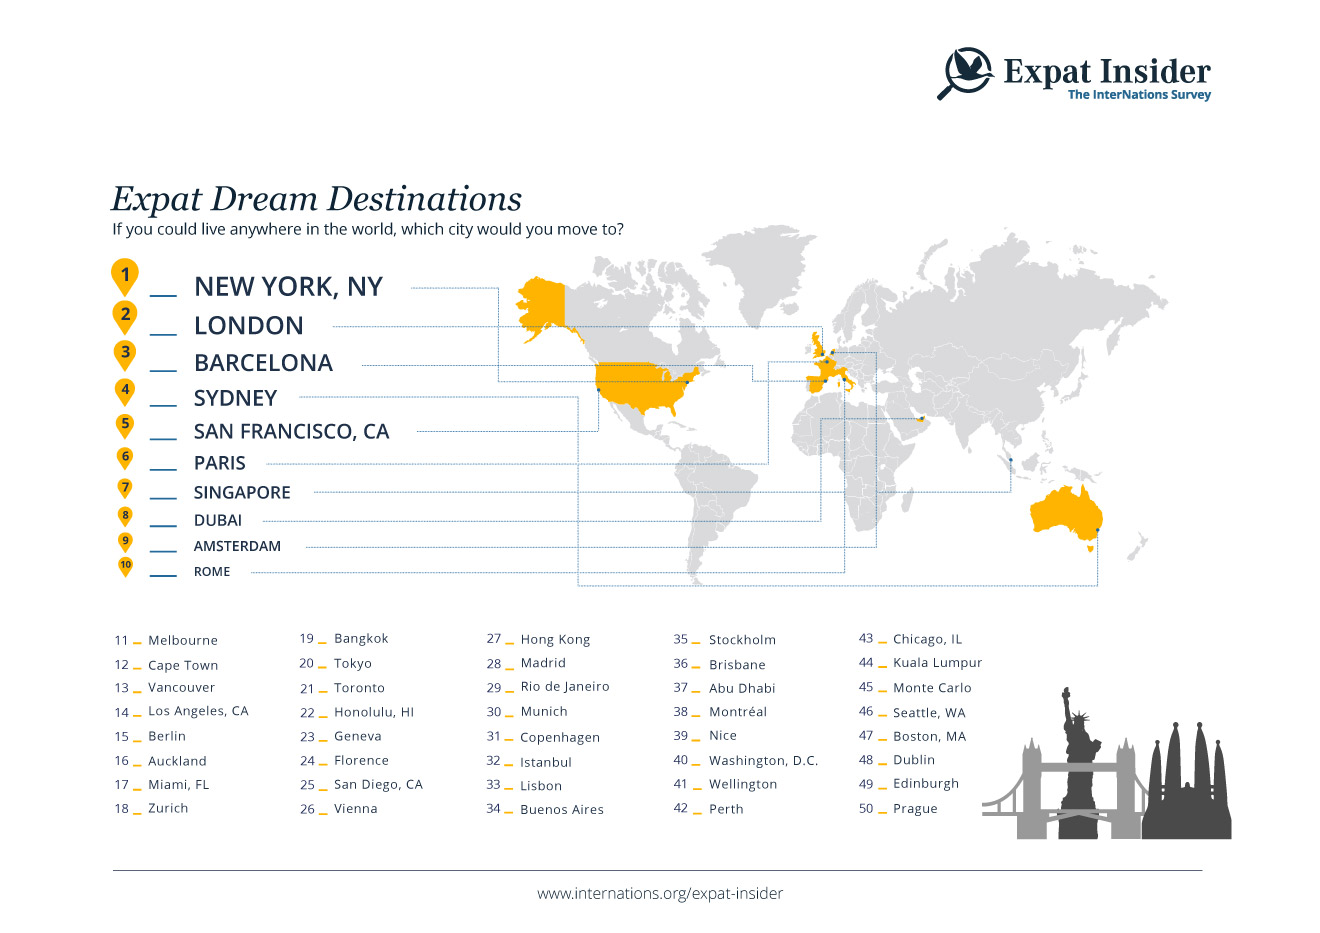 Expat Dream Destinations 2015 - infographic